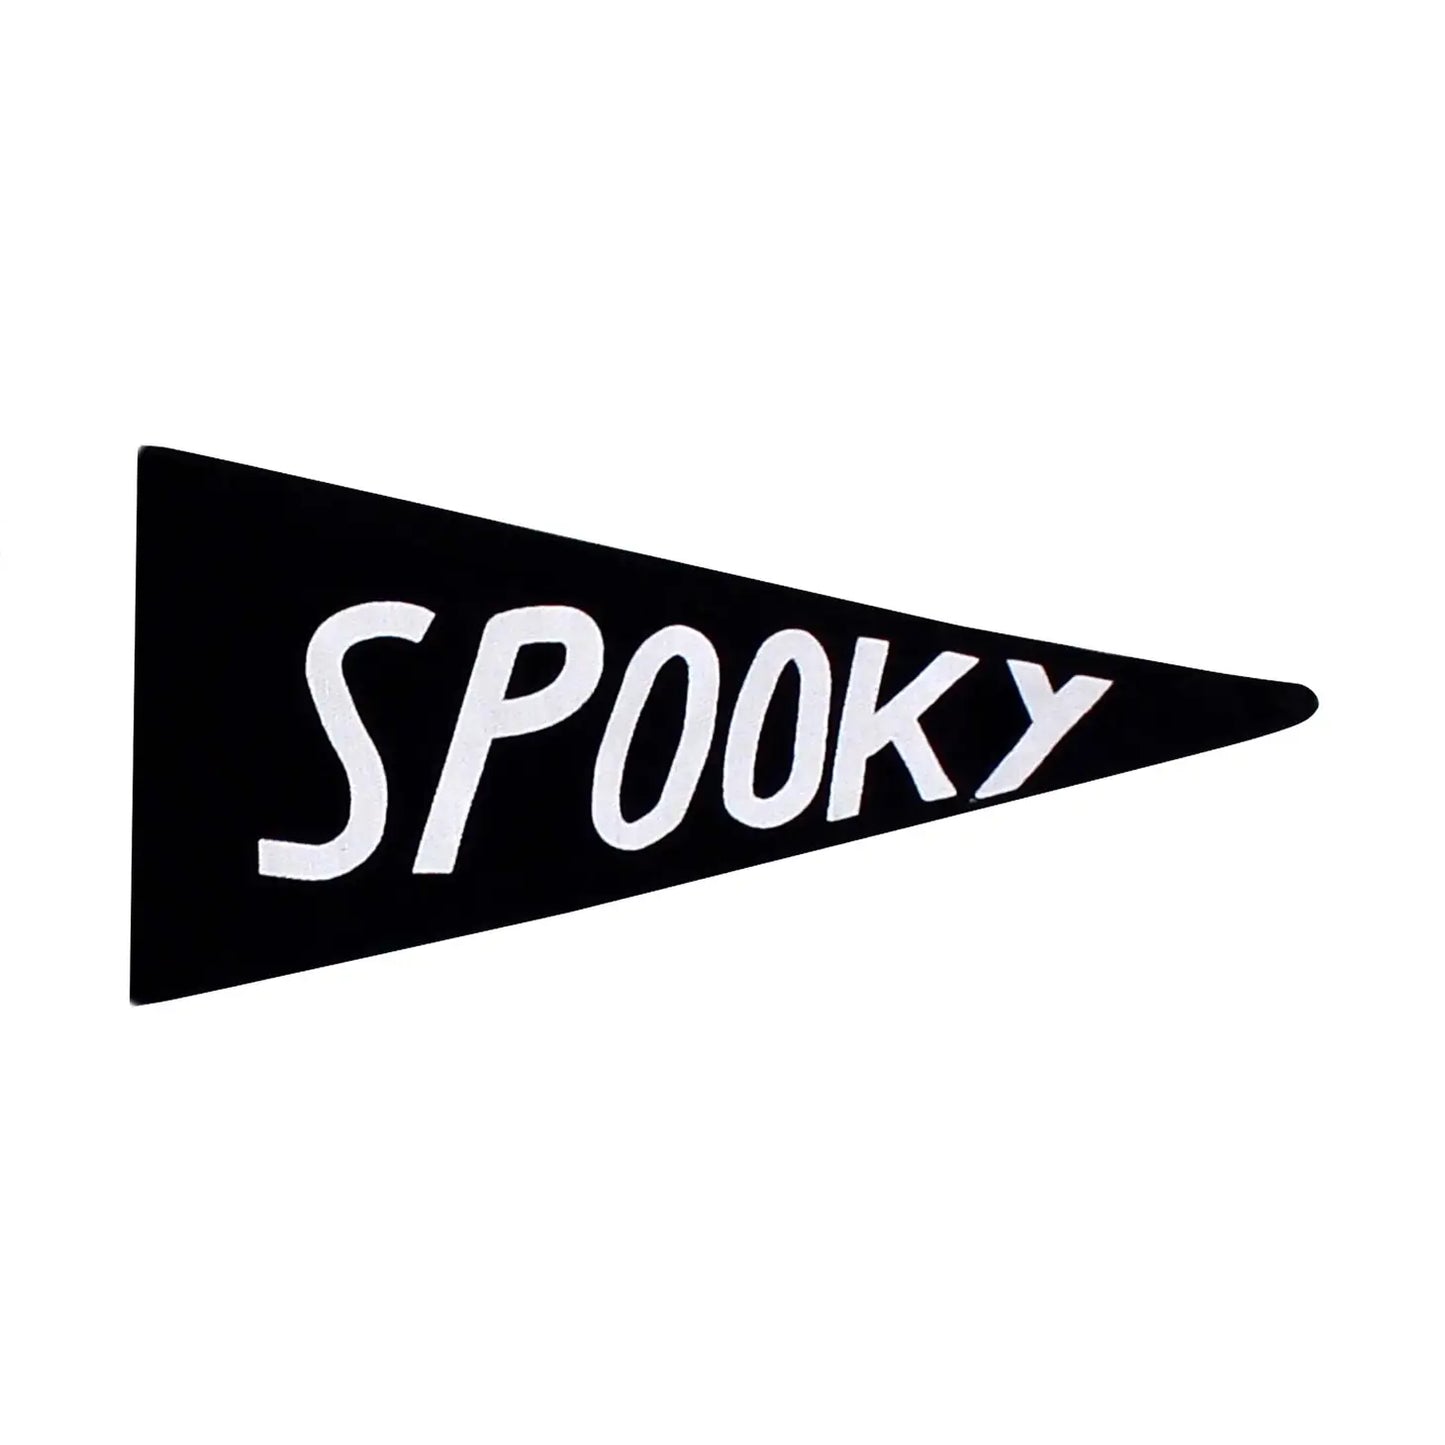 Spooky Mini Pennant